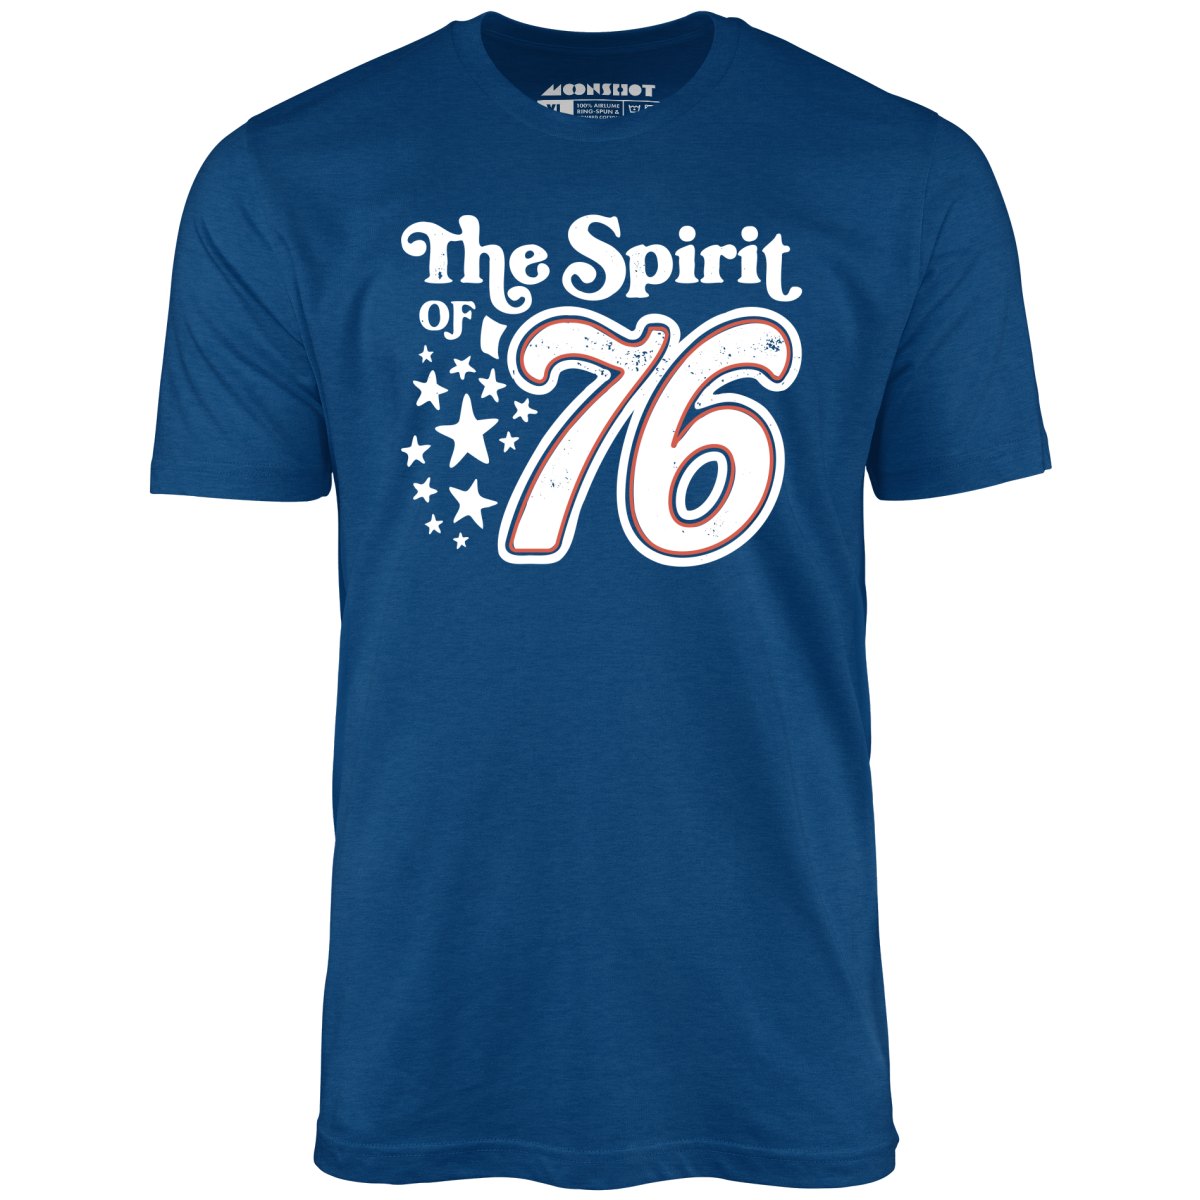 The Spirit of '76 - Unisex T-Shirt